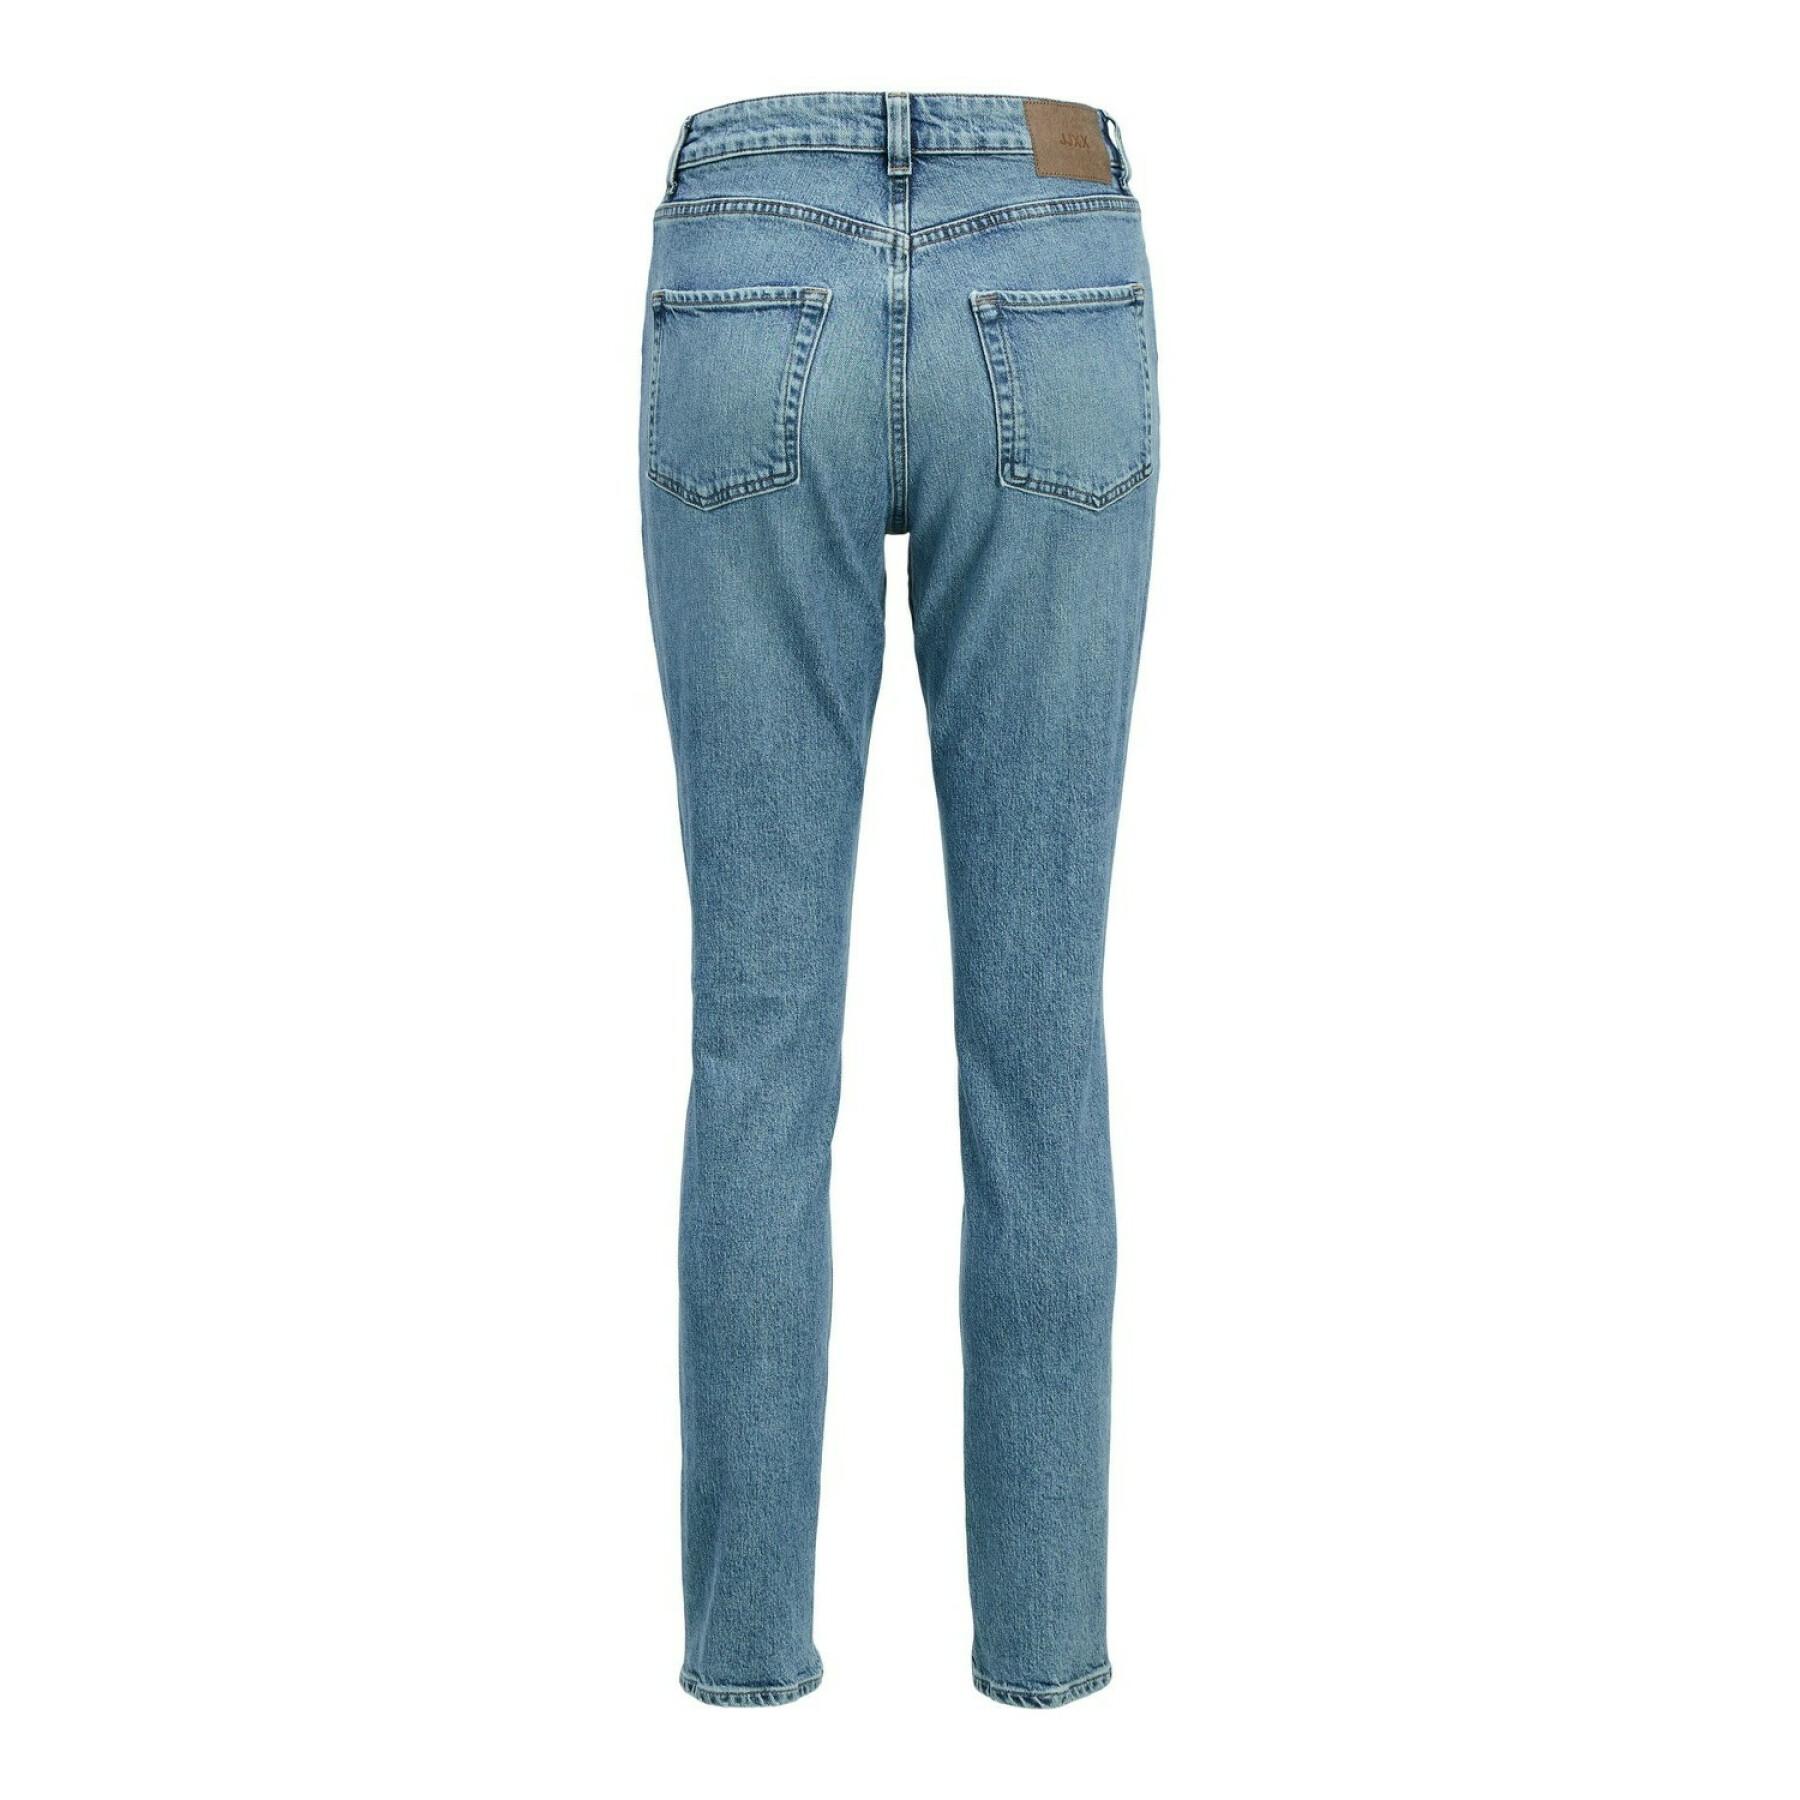 Jeans skinny da donna JJXX berlin rc2001